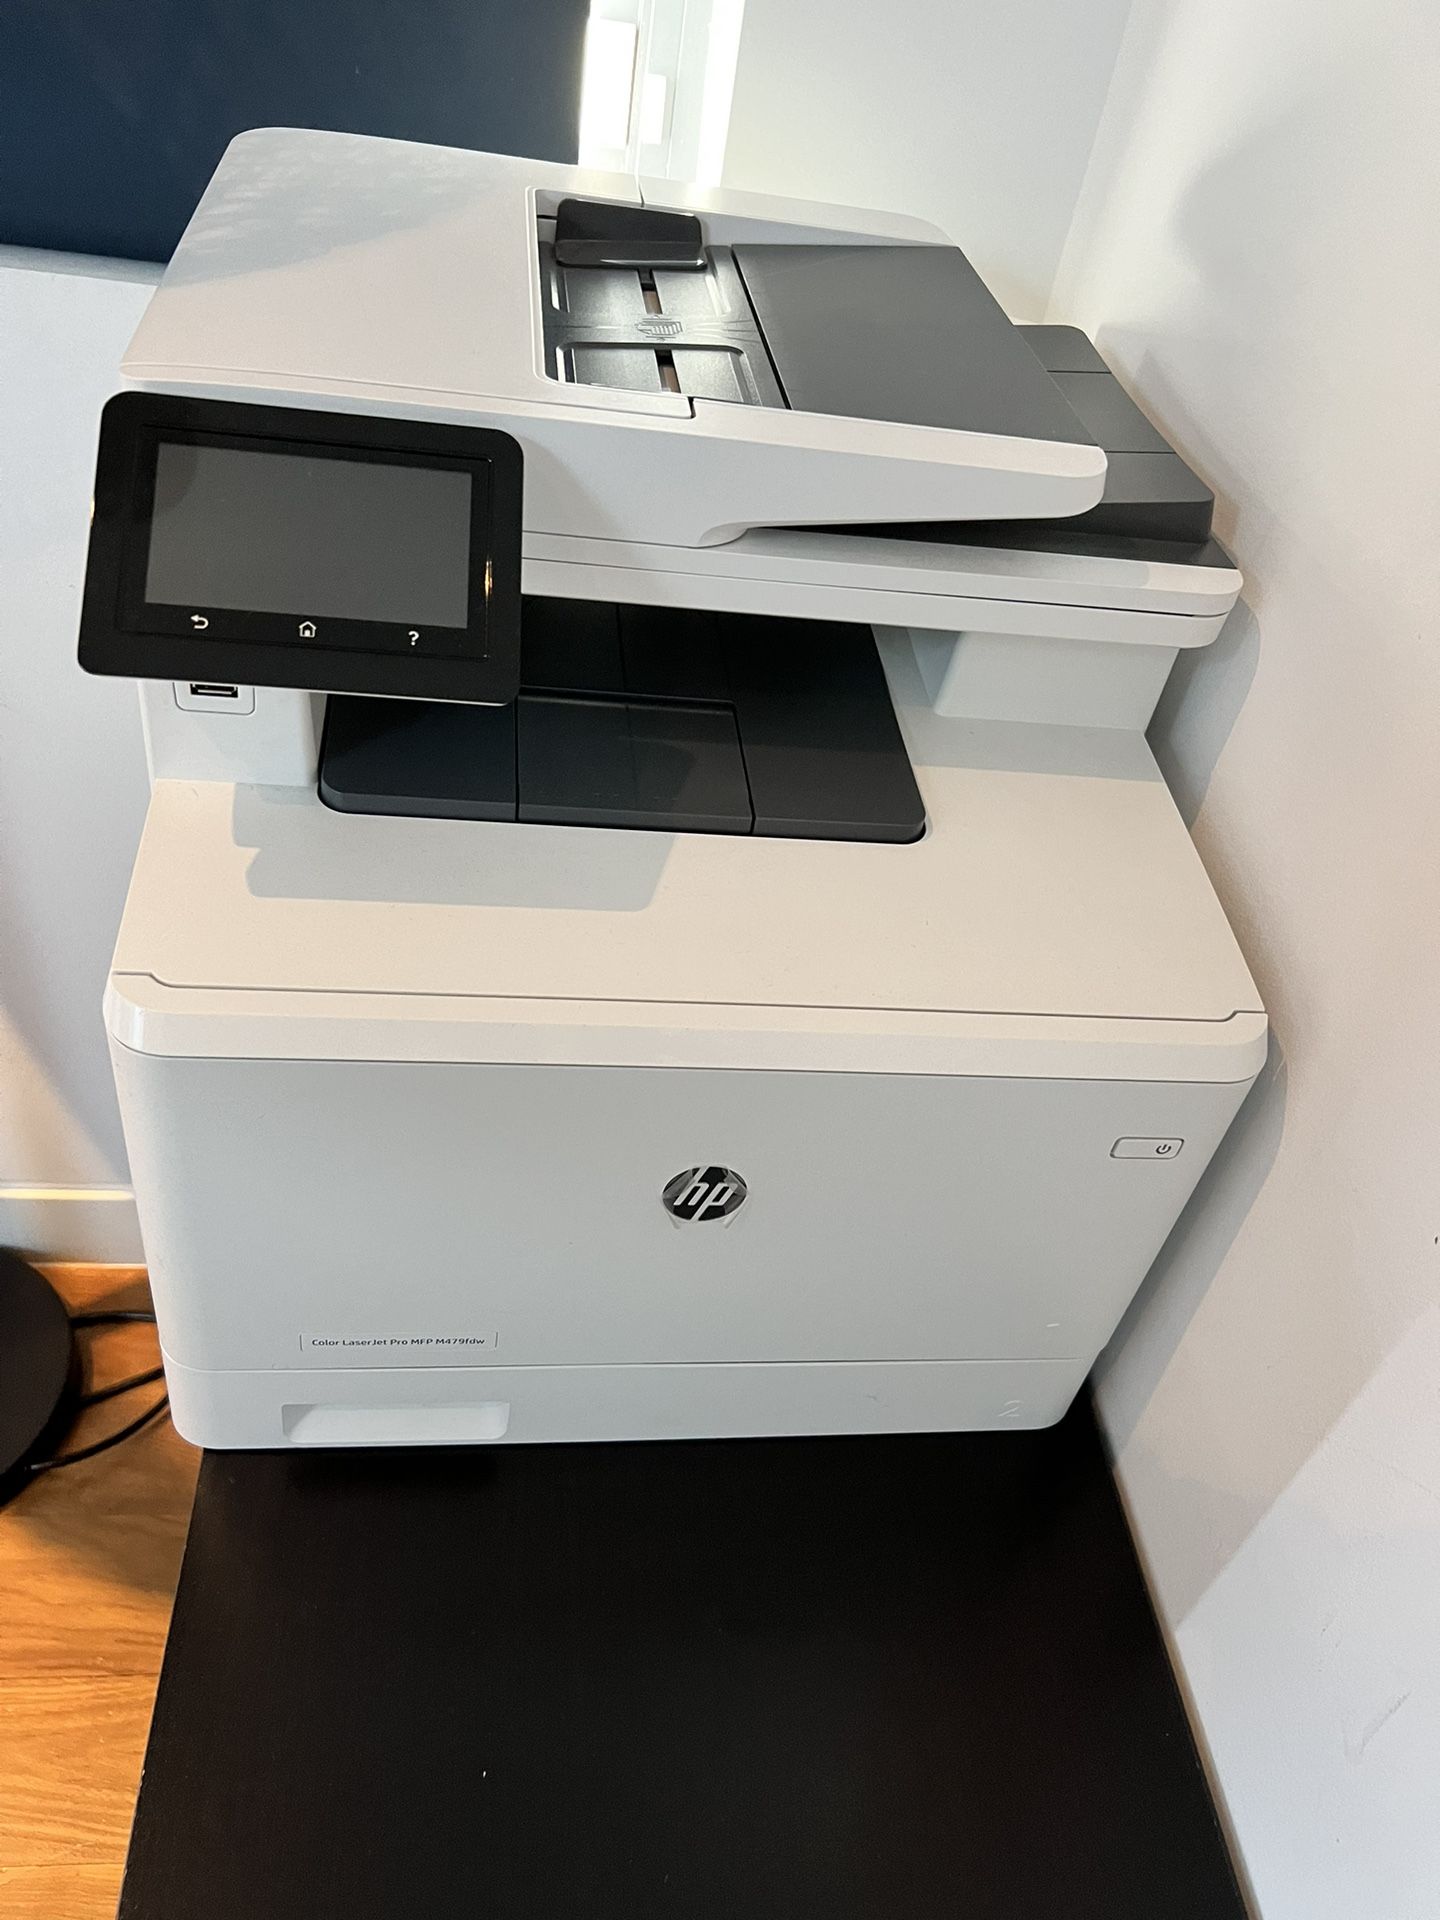 HP Laserjet printer for sale in good condition. HP Laser Jet Pro MFP M479fdw